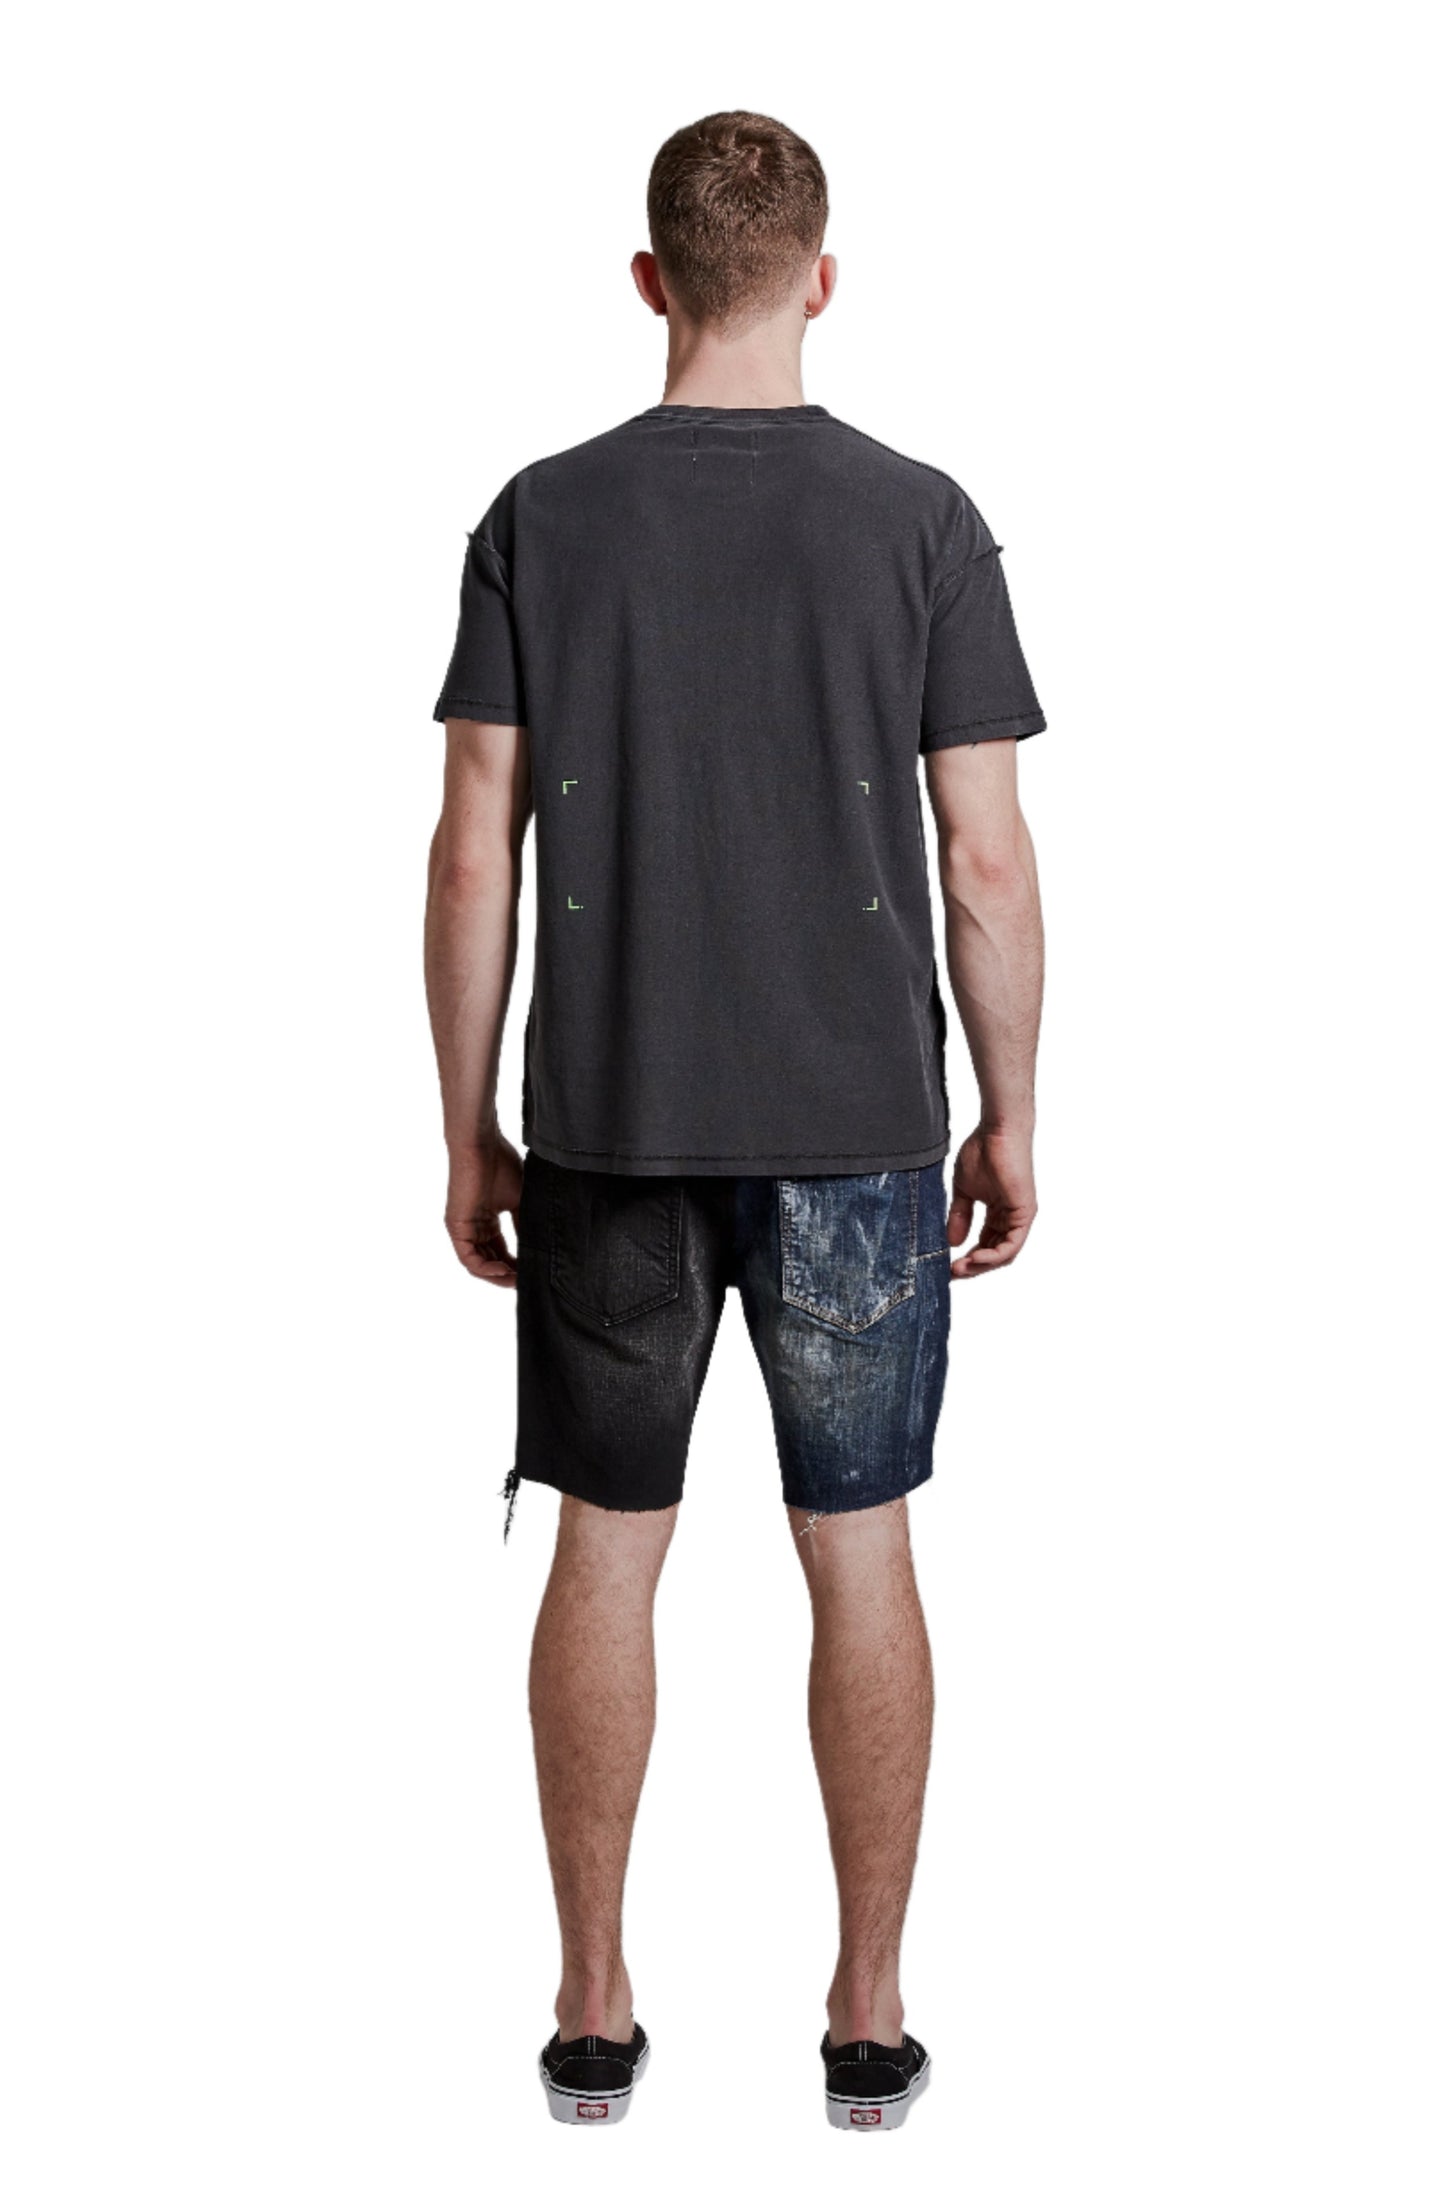 PURPLE BRAND - Men's Denim Jean Short - Mid Rise Short - Style No. P020 - Half and Half Short - Model Back Pose